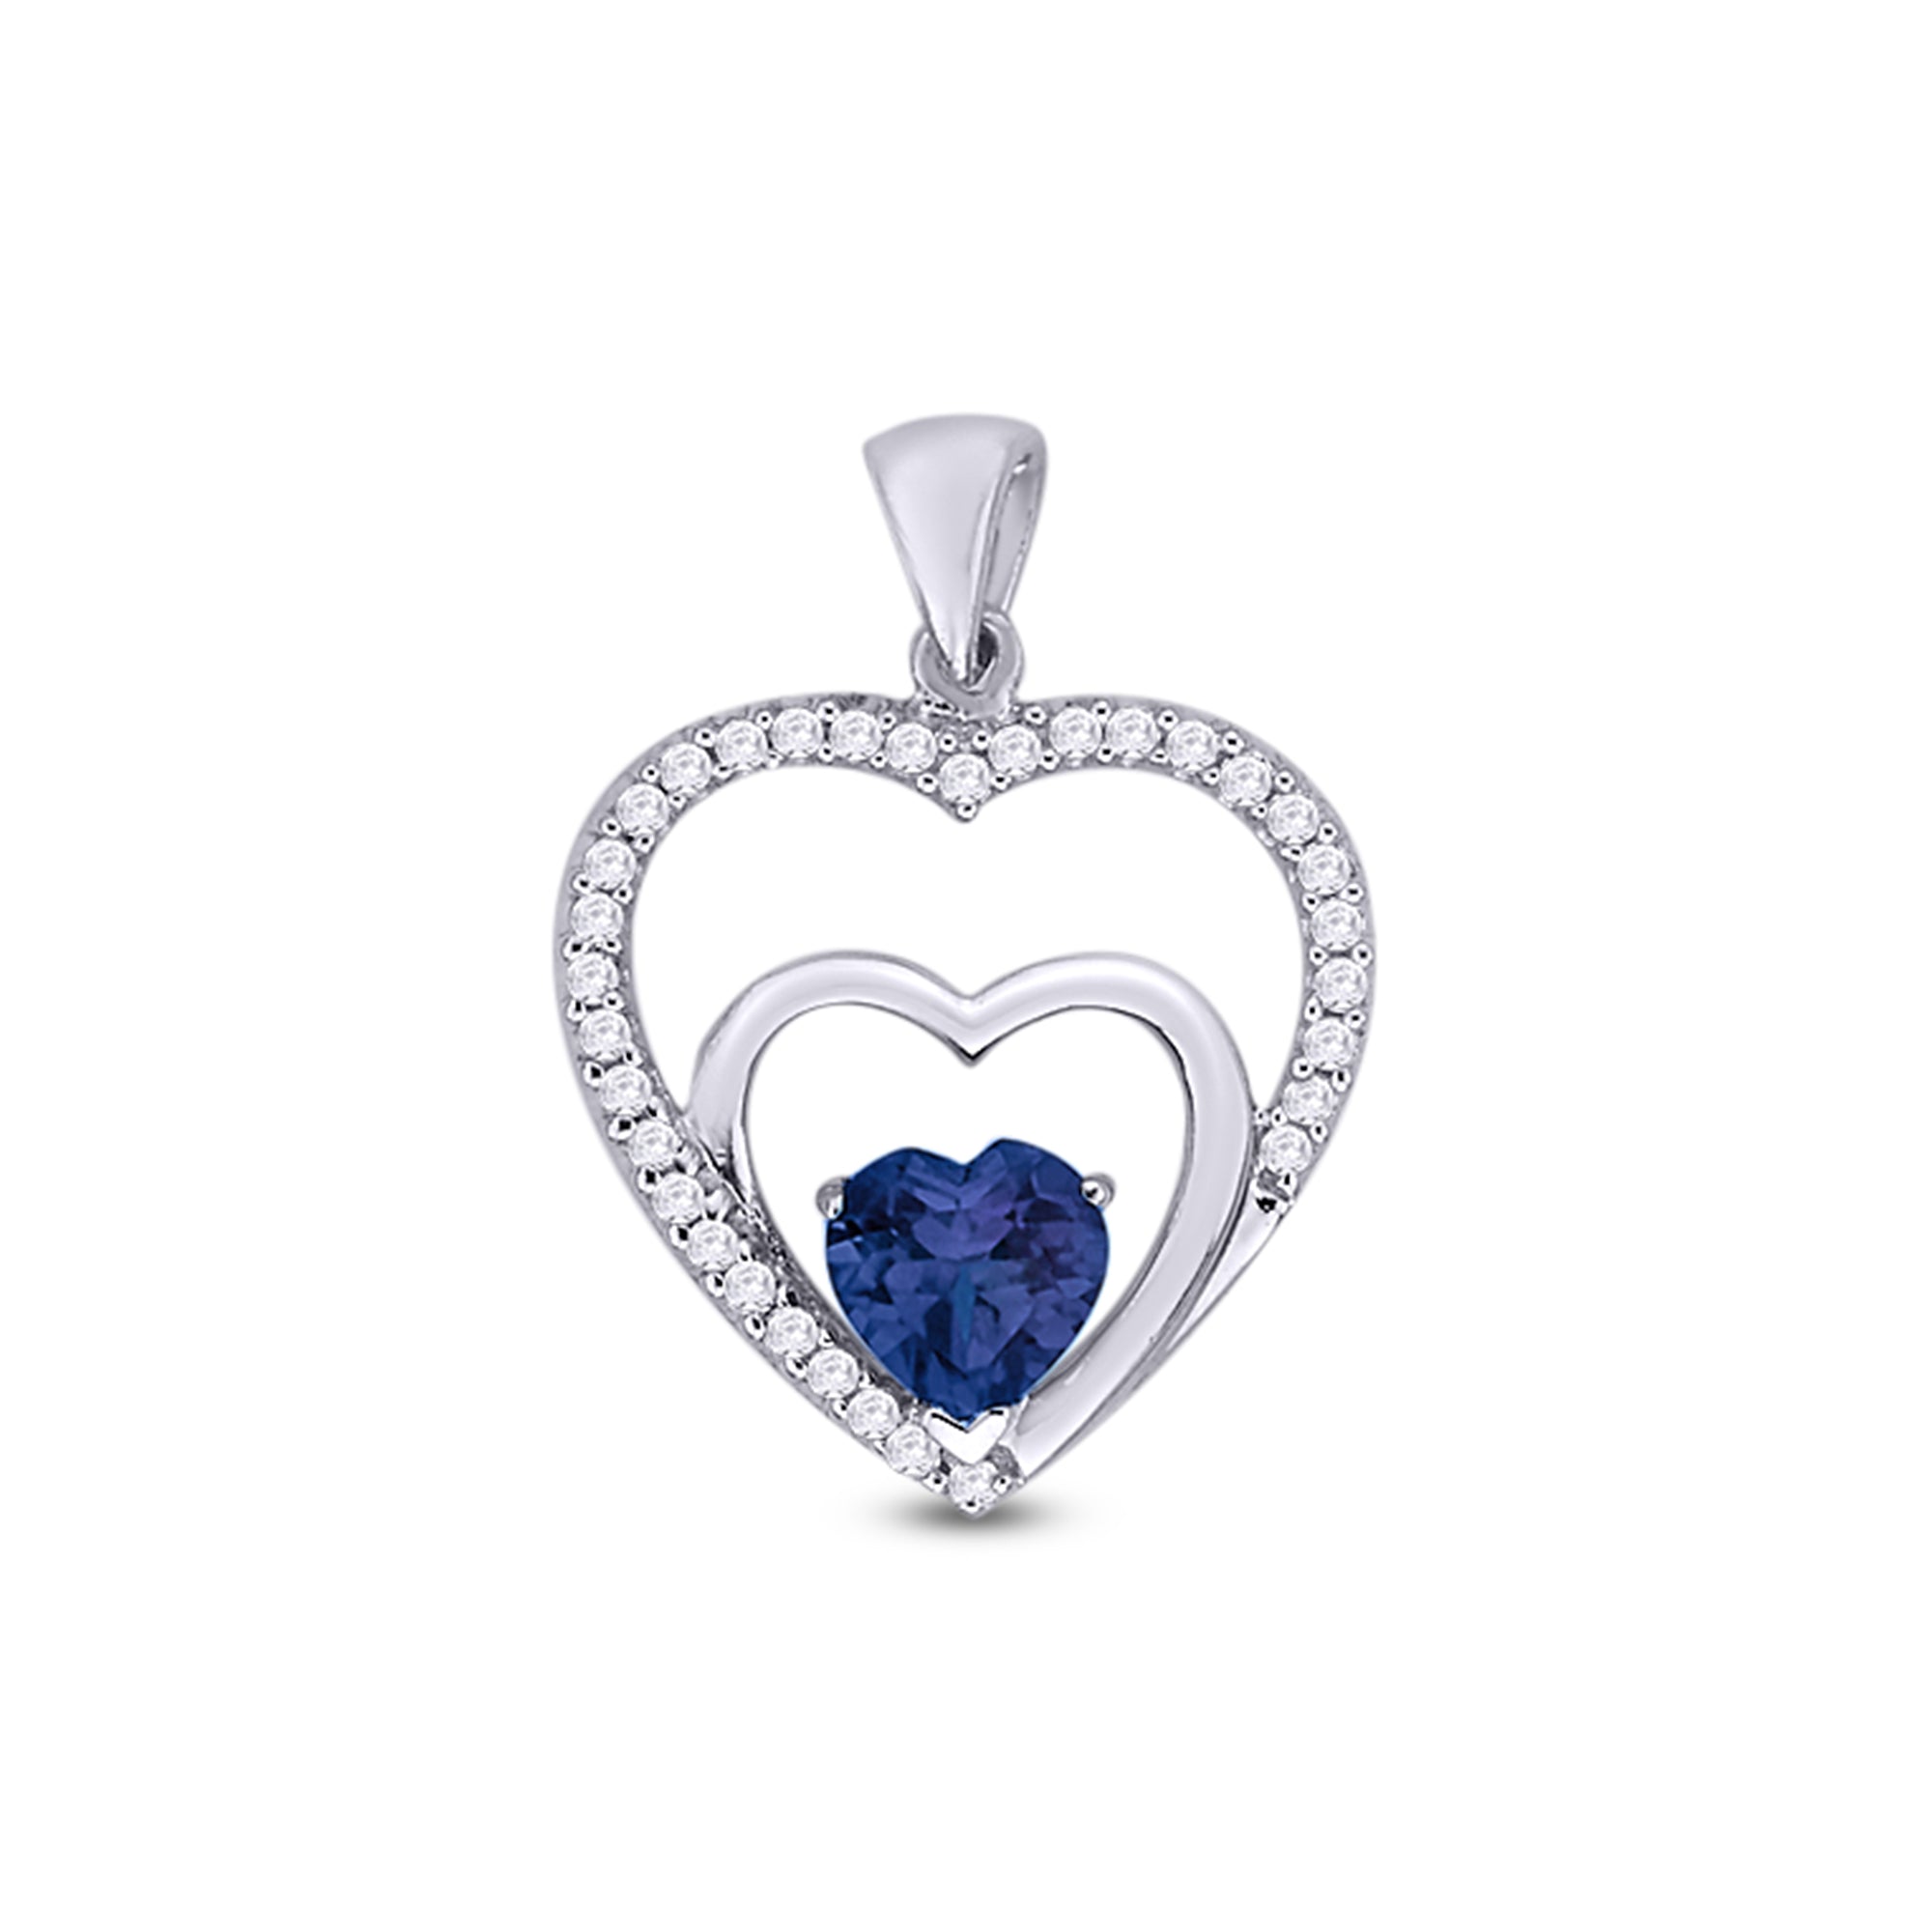 9ct white gold heart shape sapphire in diamond set heart pendant 0.16ct